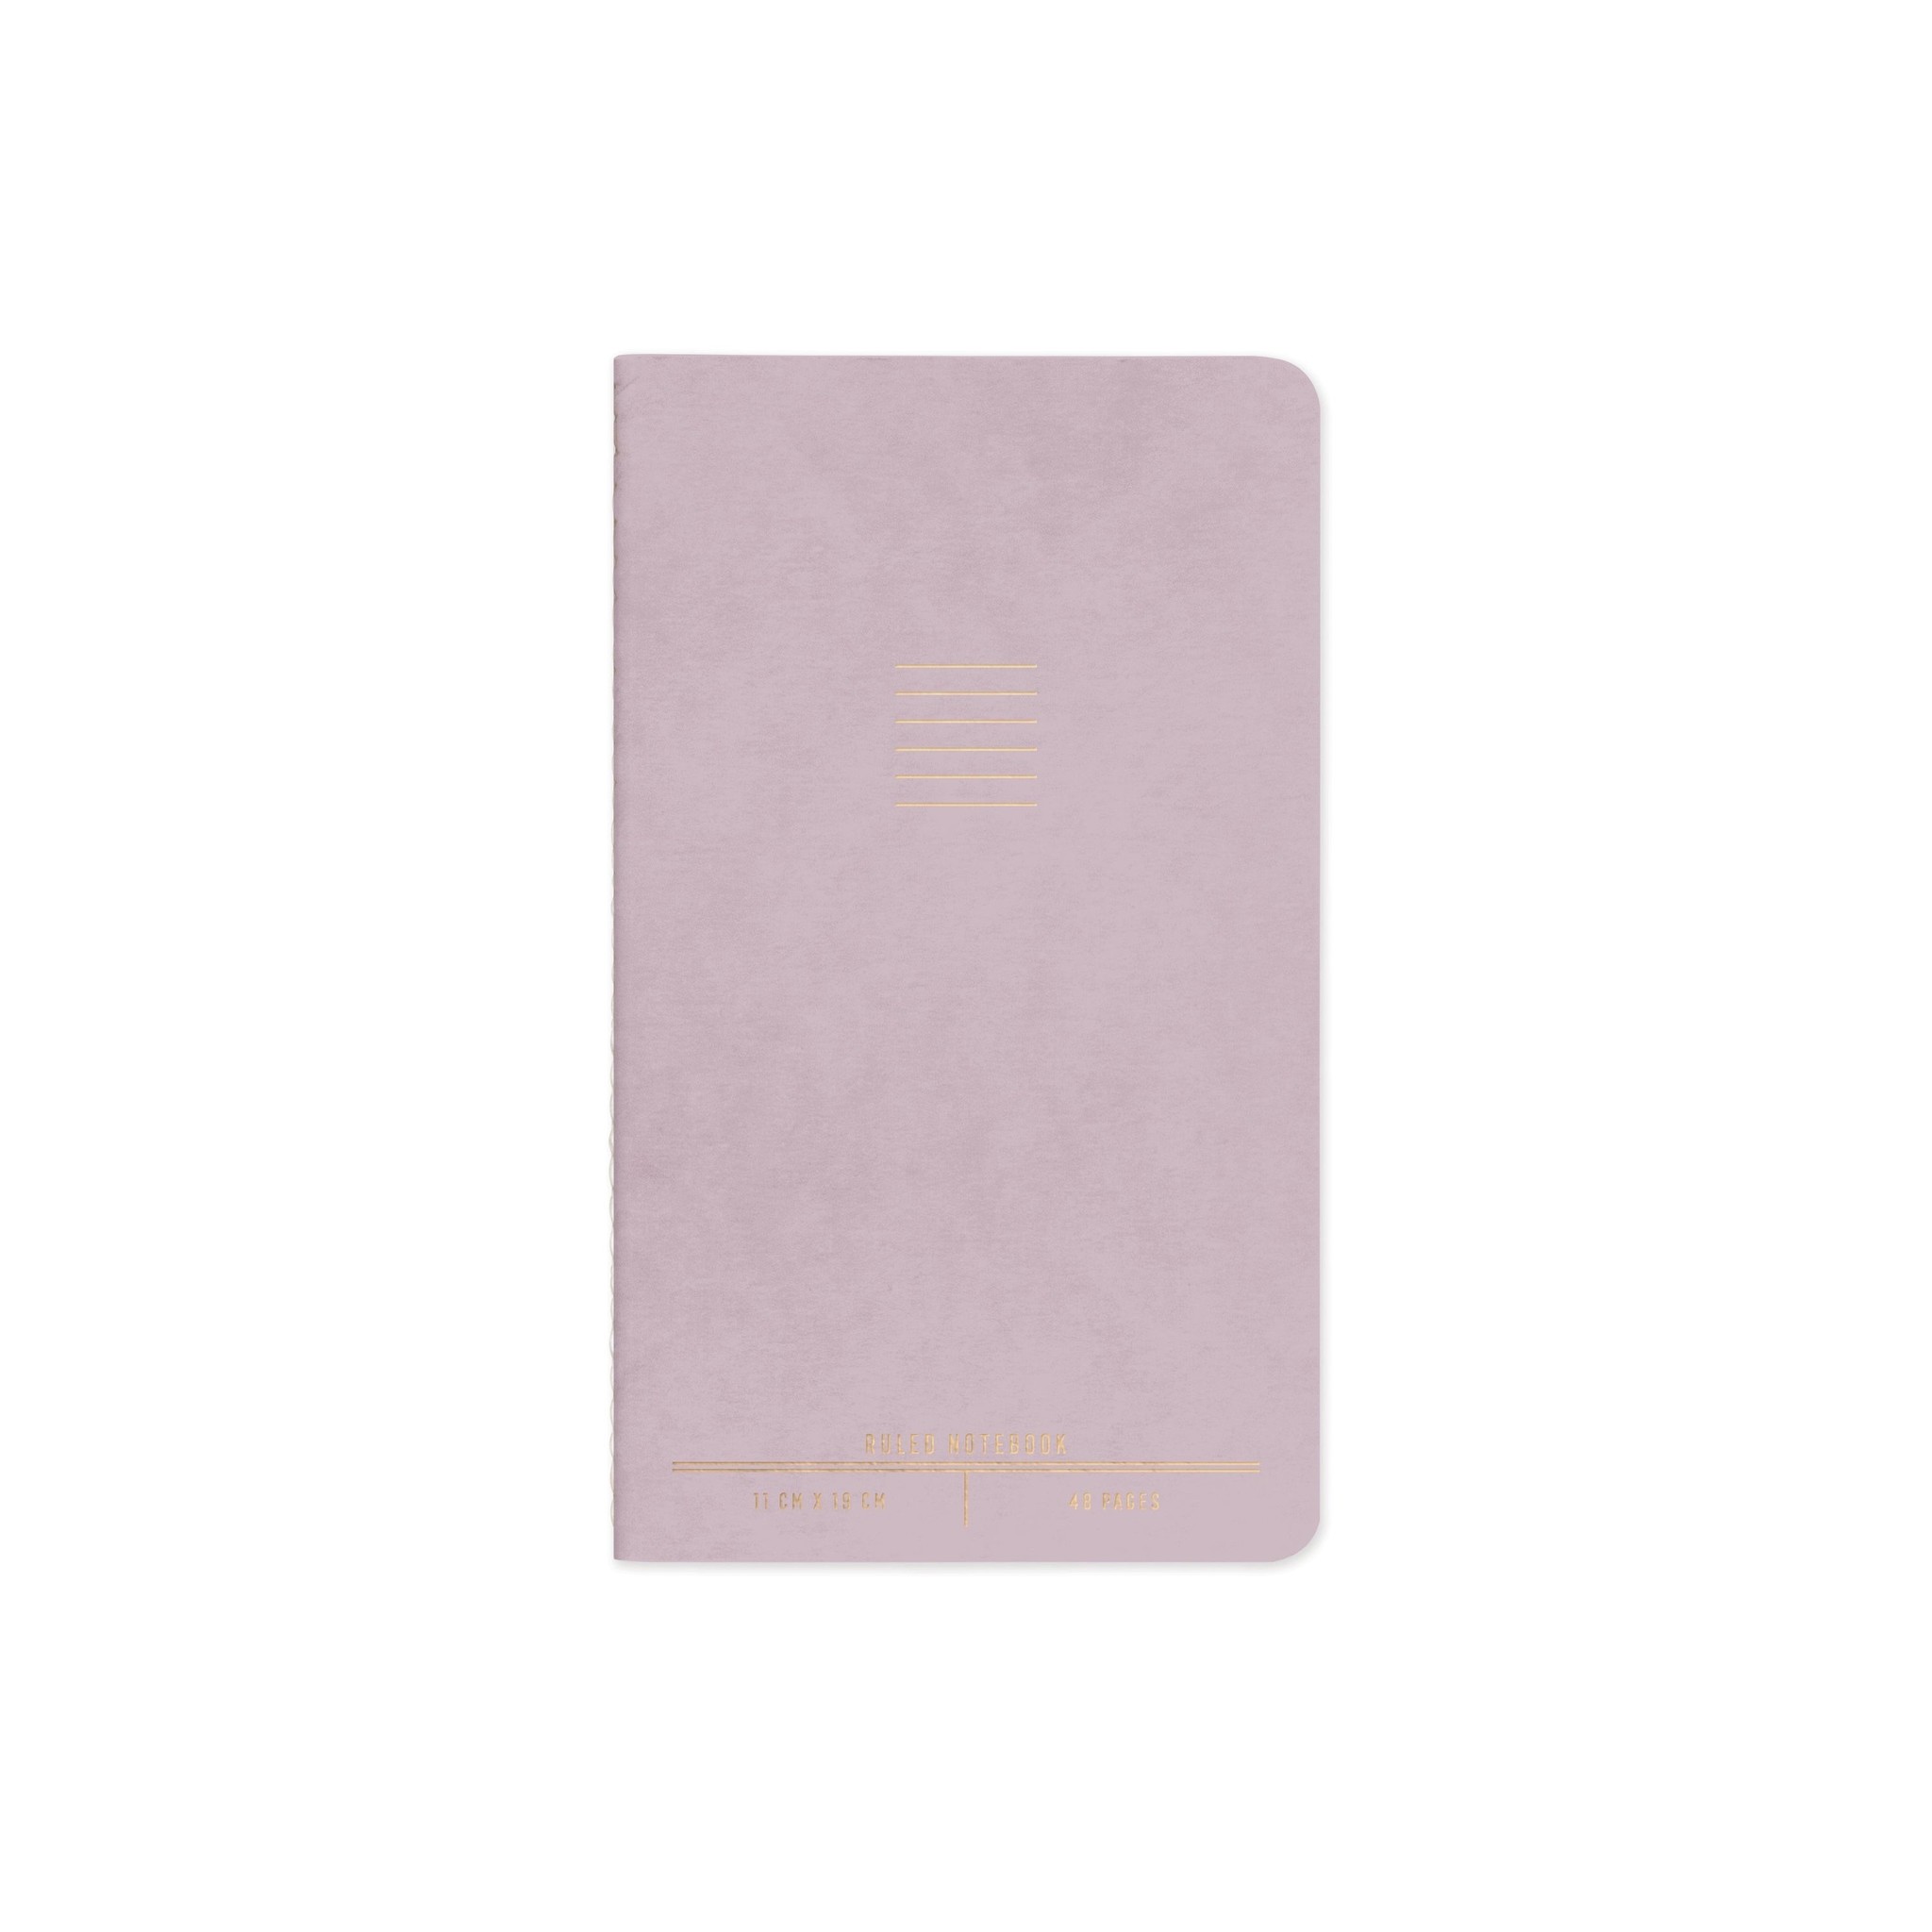 Designworks Ink - DI Dusty Lilac Flex Notebook